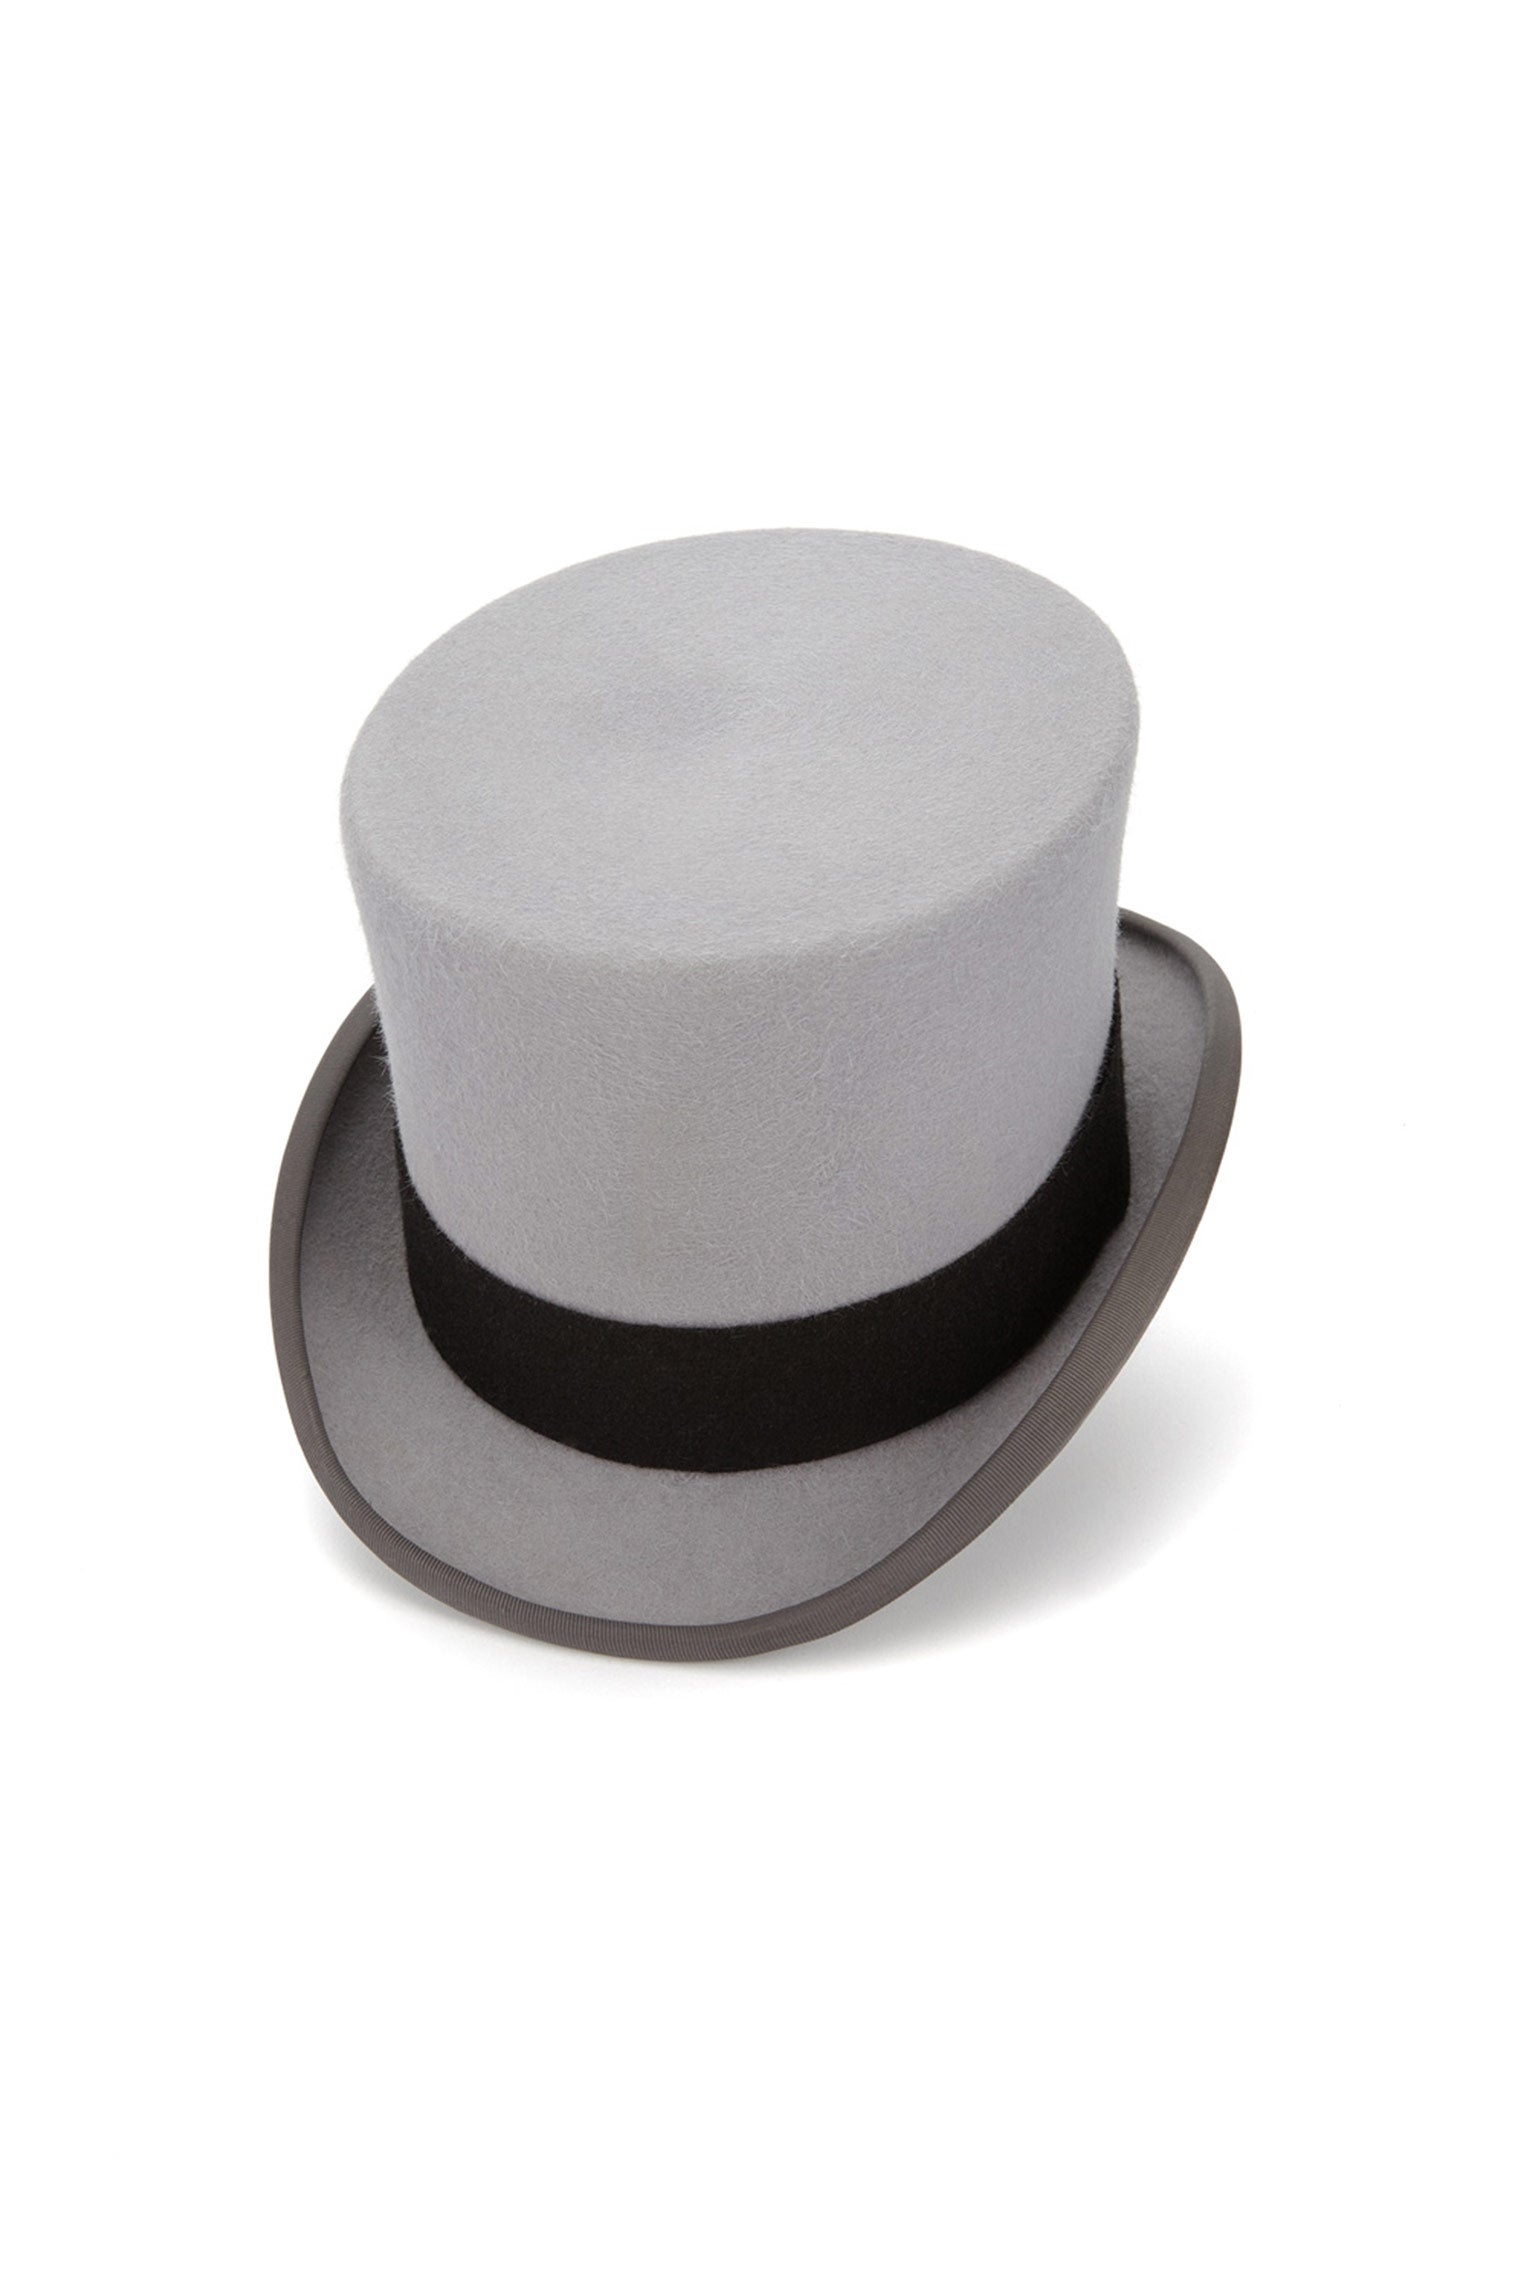 Ascot Top Hat - Top Hats - Lock & Co. Hatters London UK